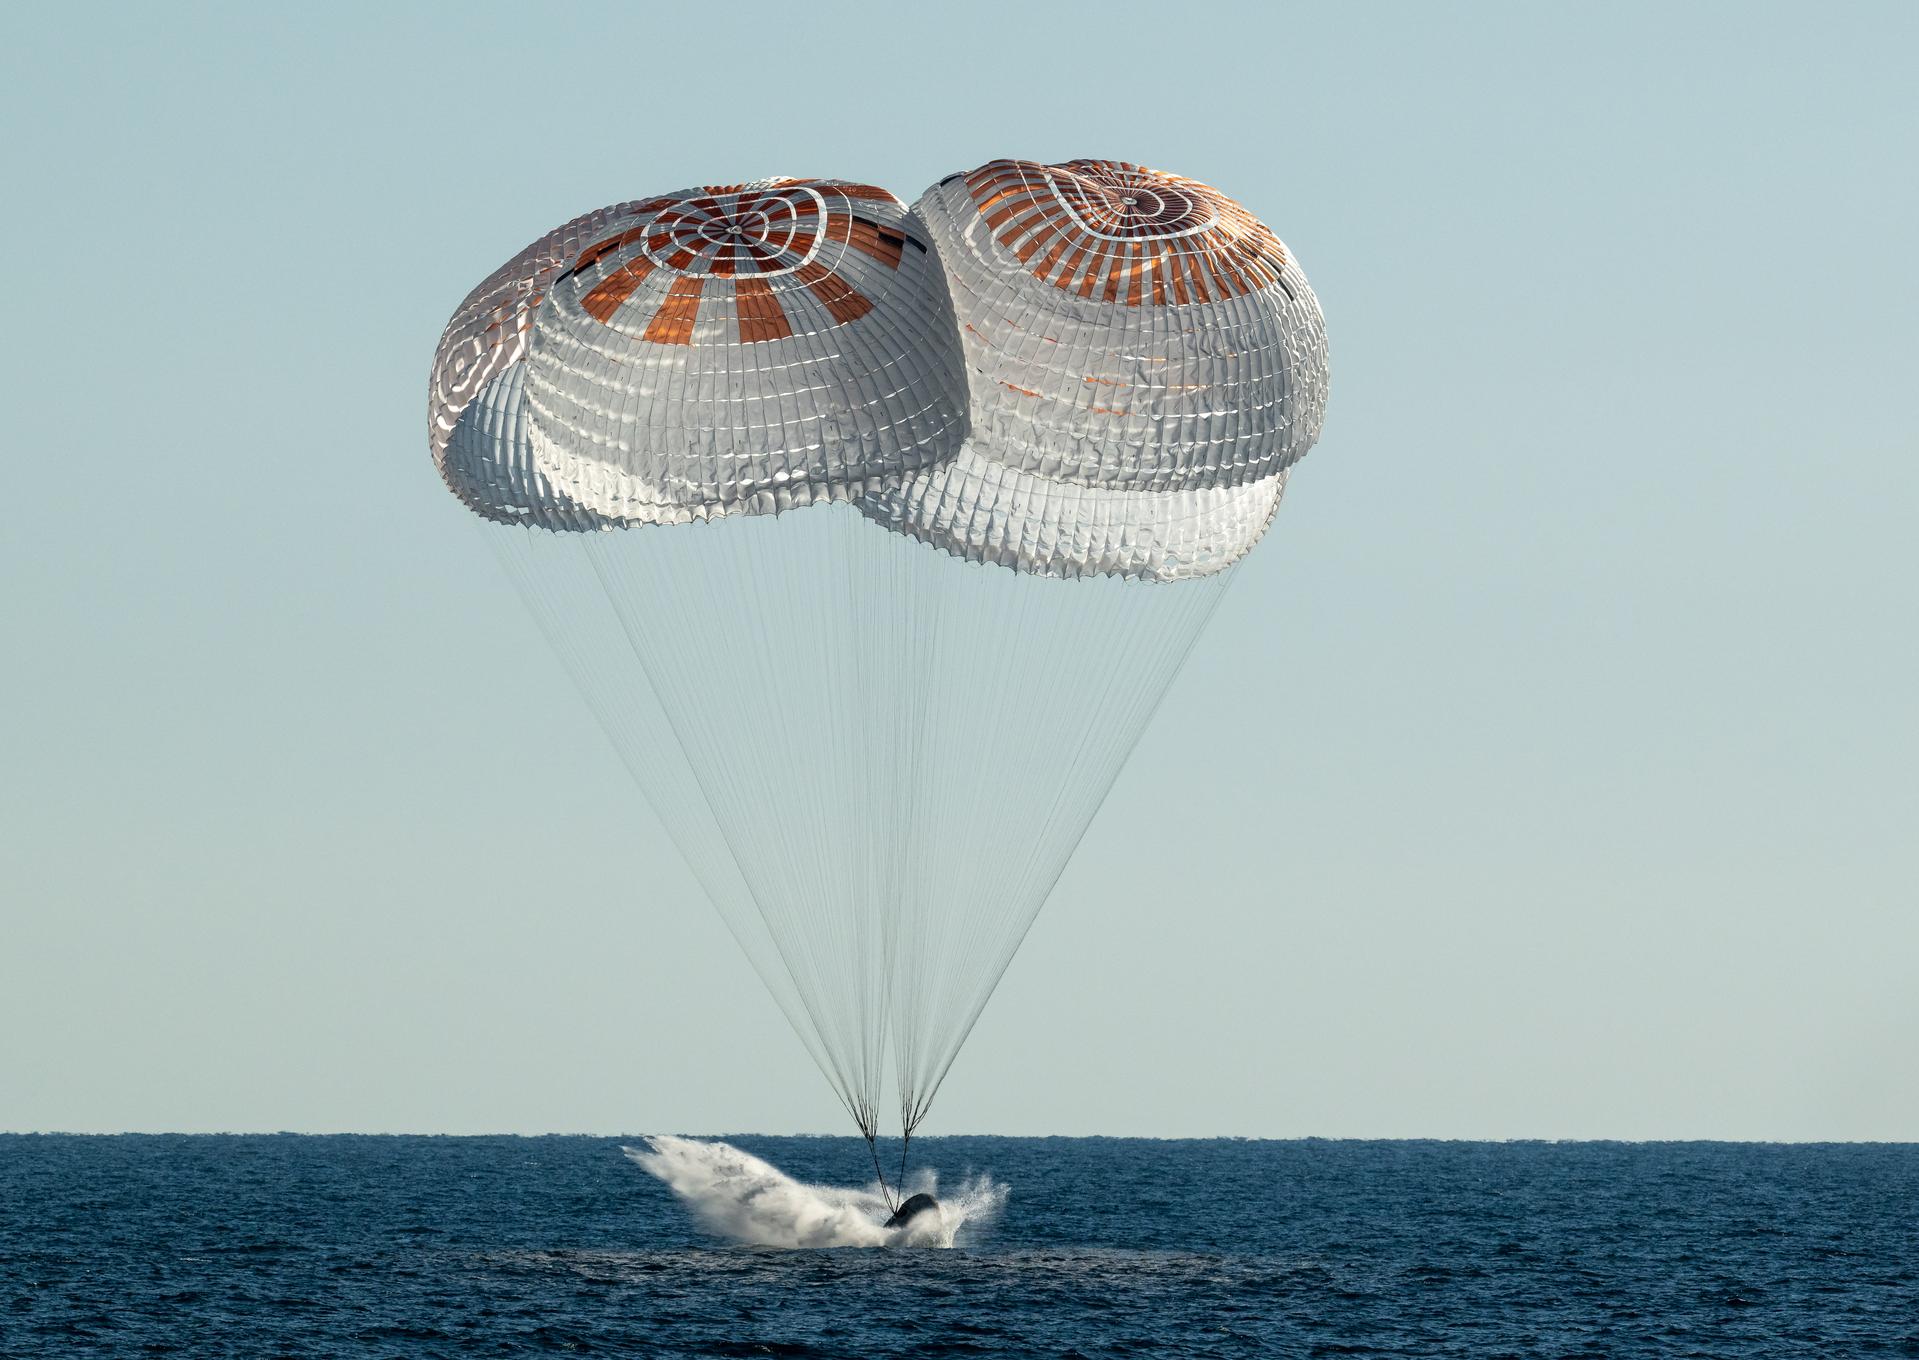 Crew-4 astronauts aboard the Dragon spacecraft splash down off the coast of Jacksonville